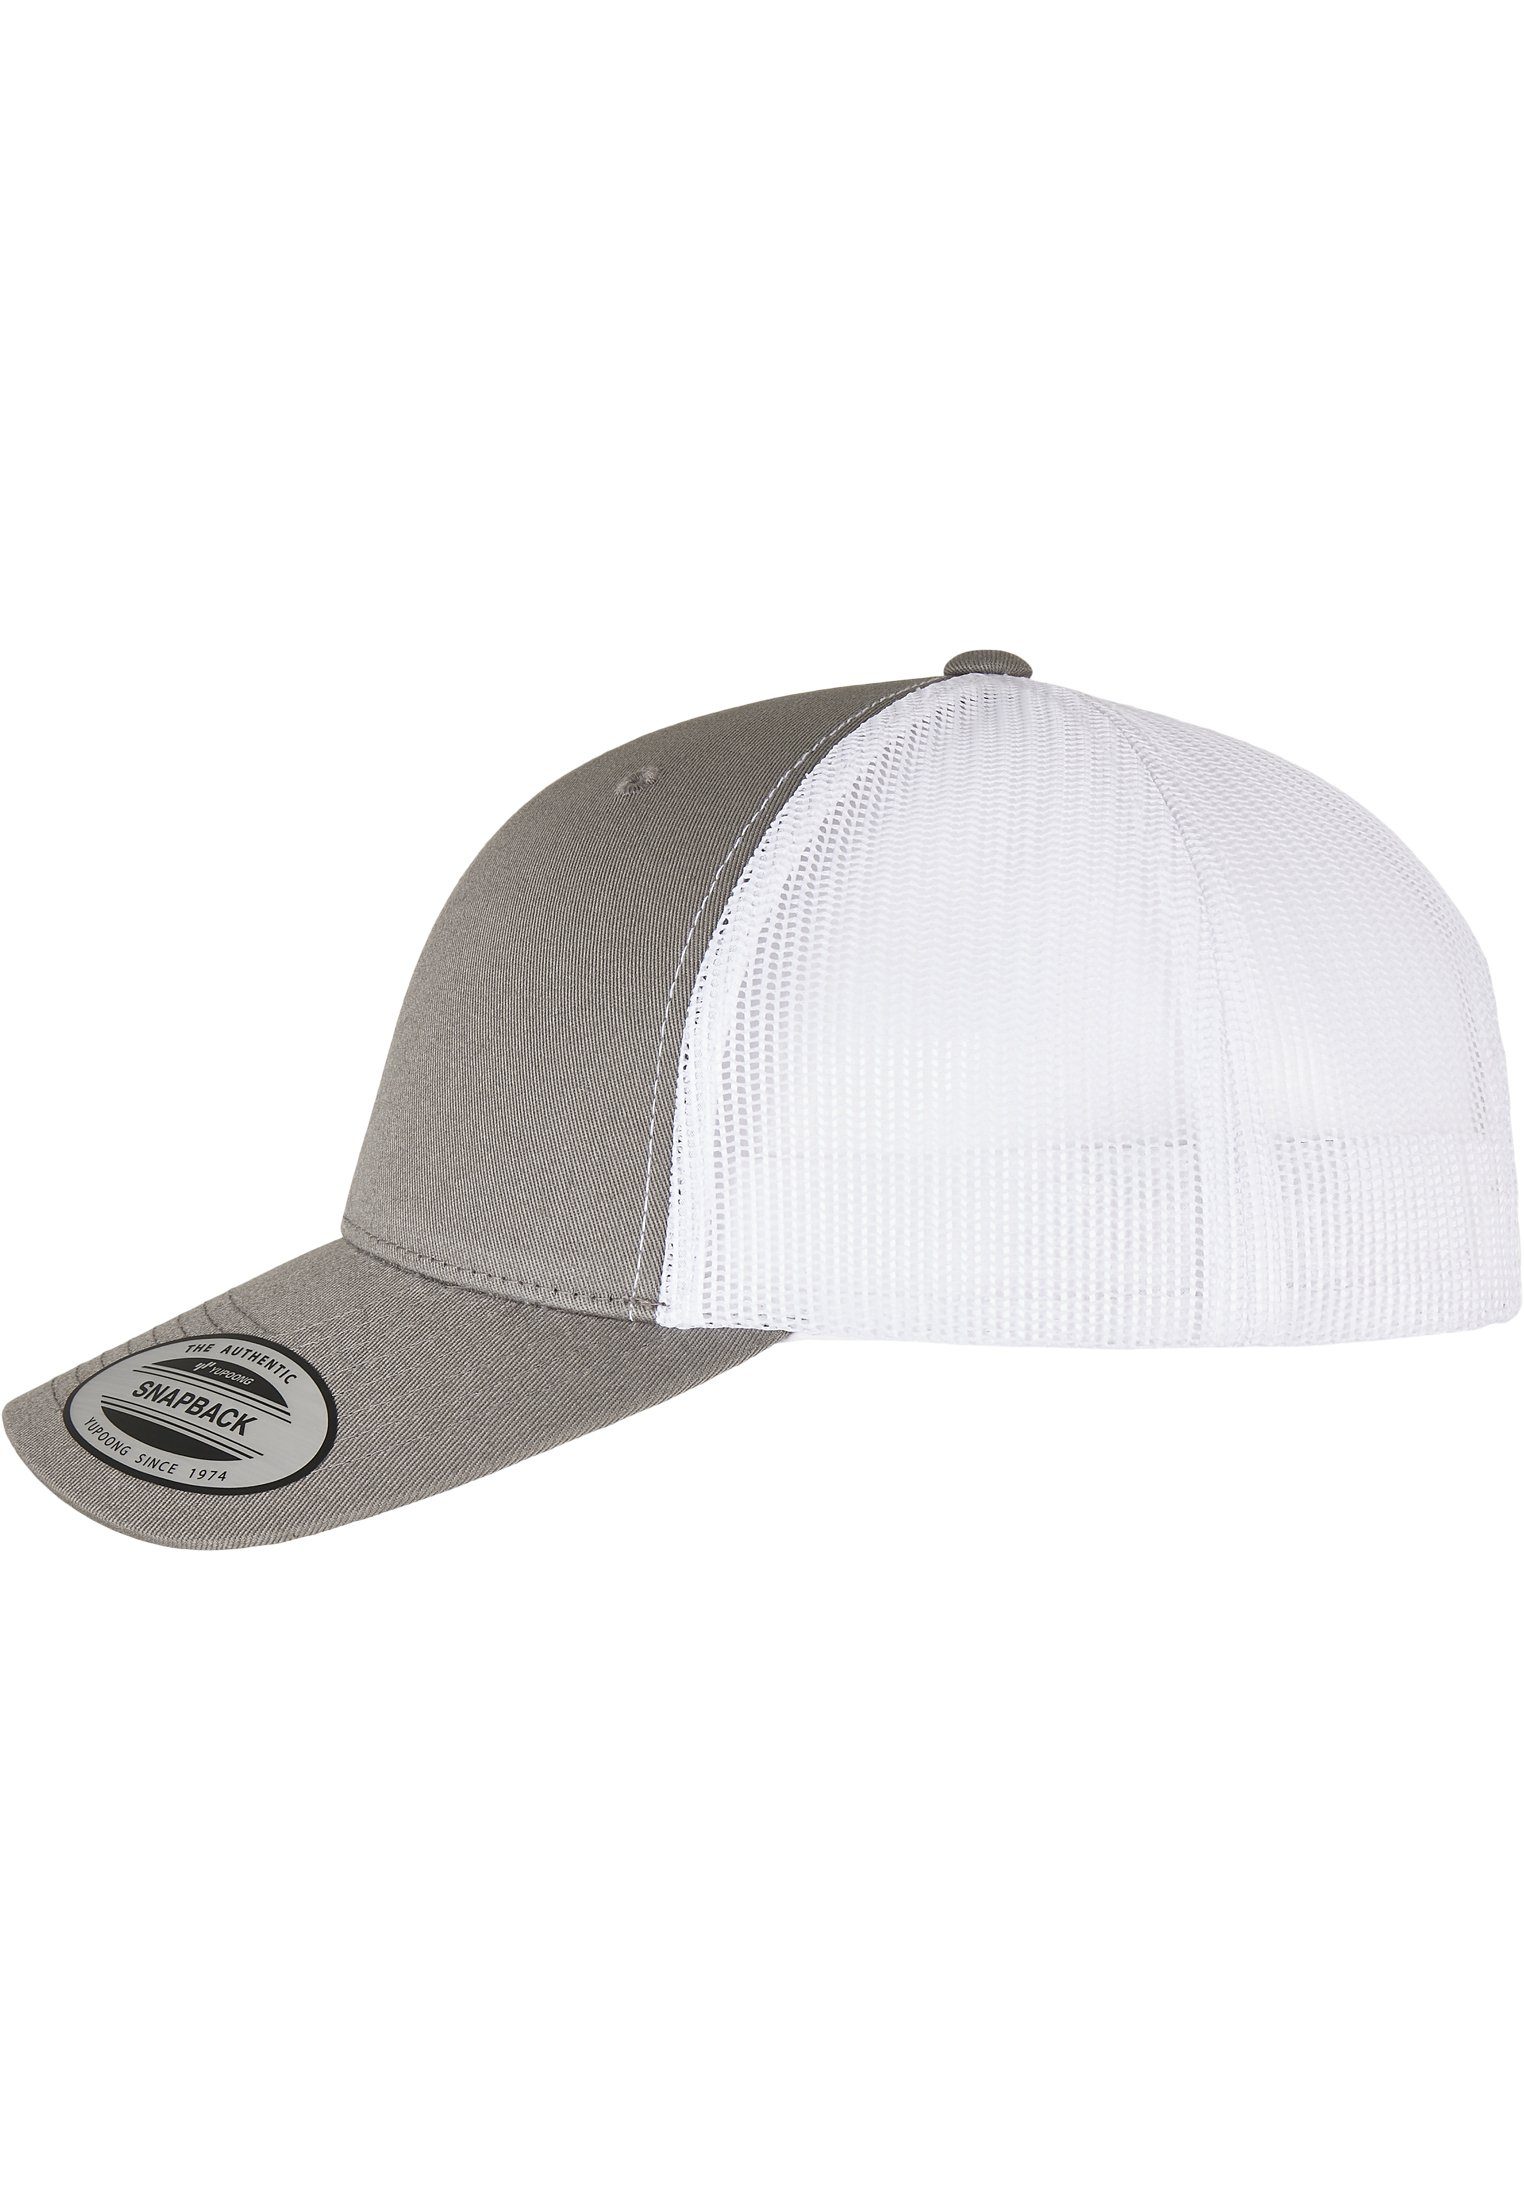 2-TONE grey/white RETRO RECYCLED CLASSICS Flex Caps CAP Cap TRUCKER Flexfit YP